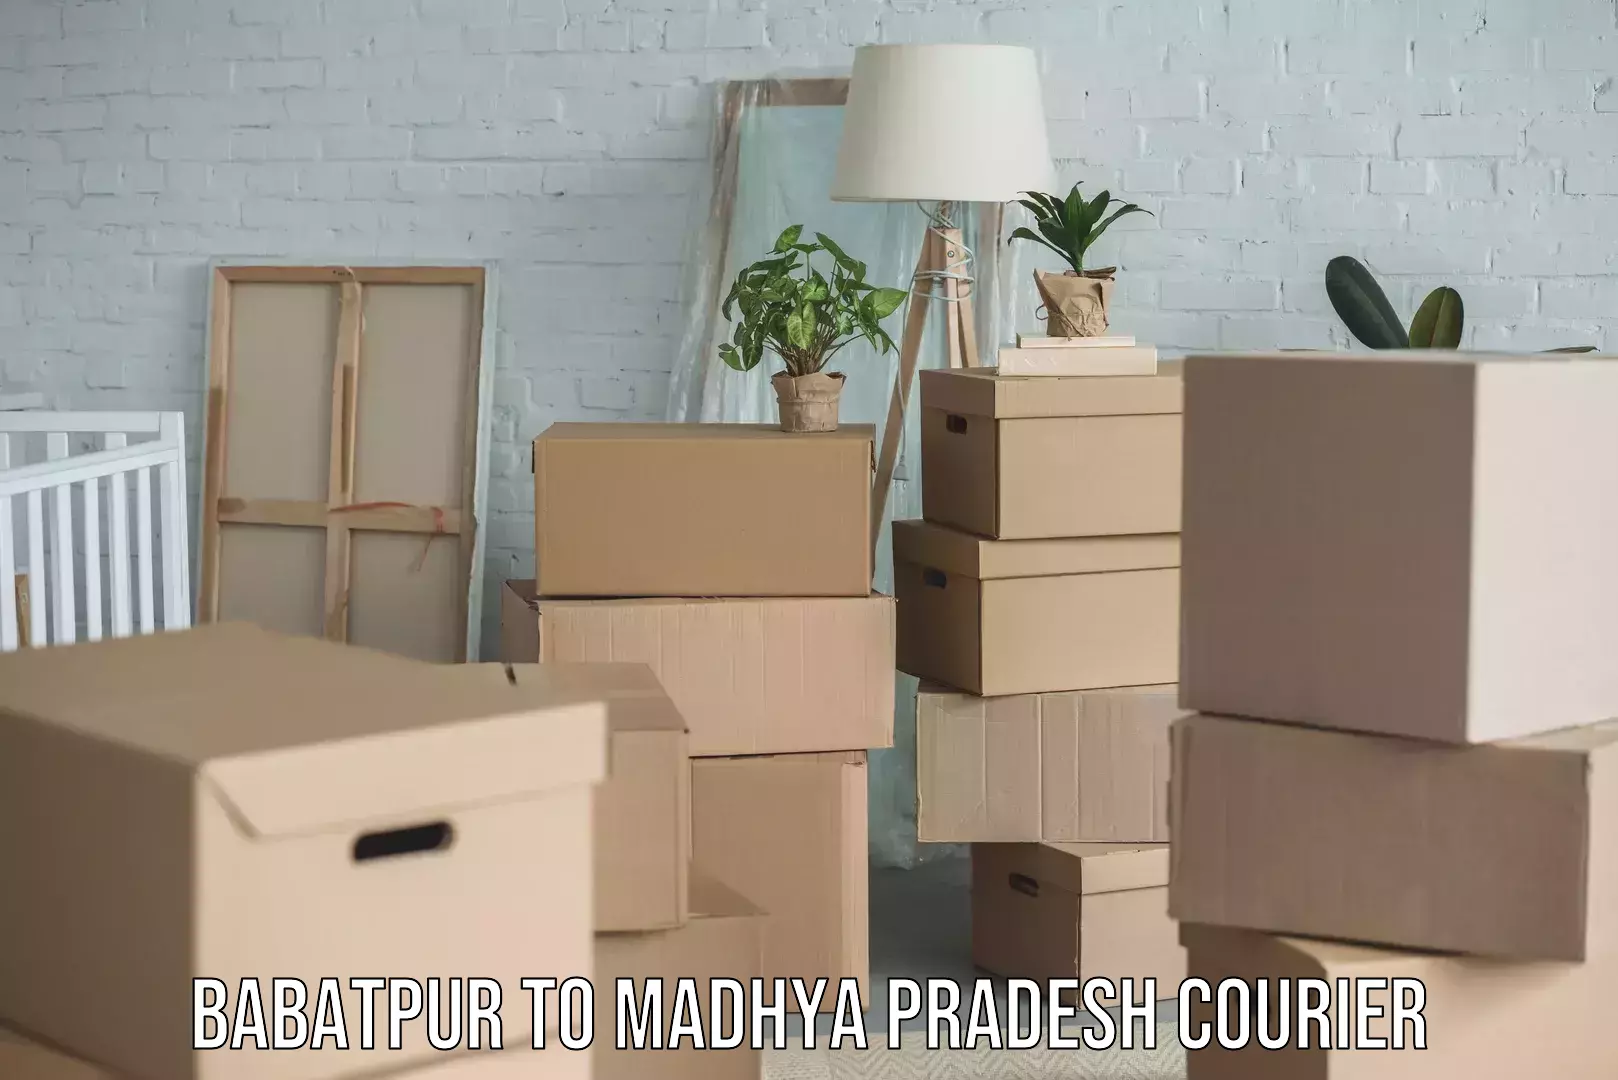 Courier service innovation Babatpur to Madhya Pradesh